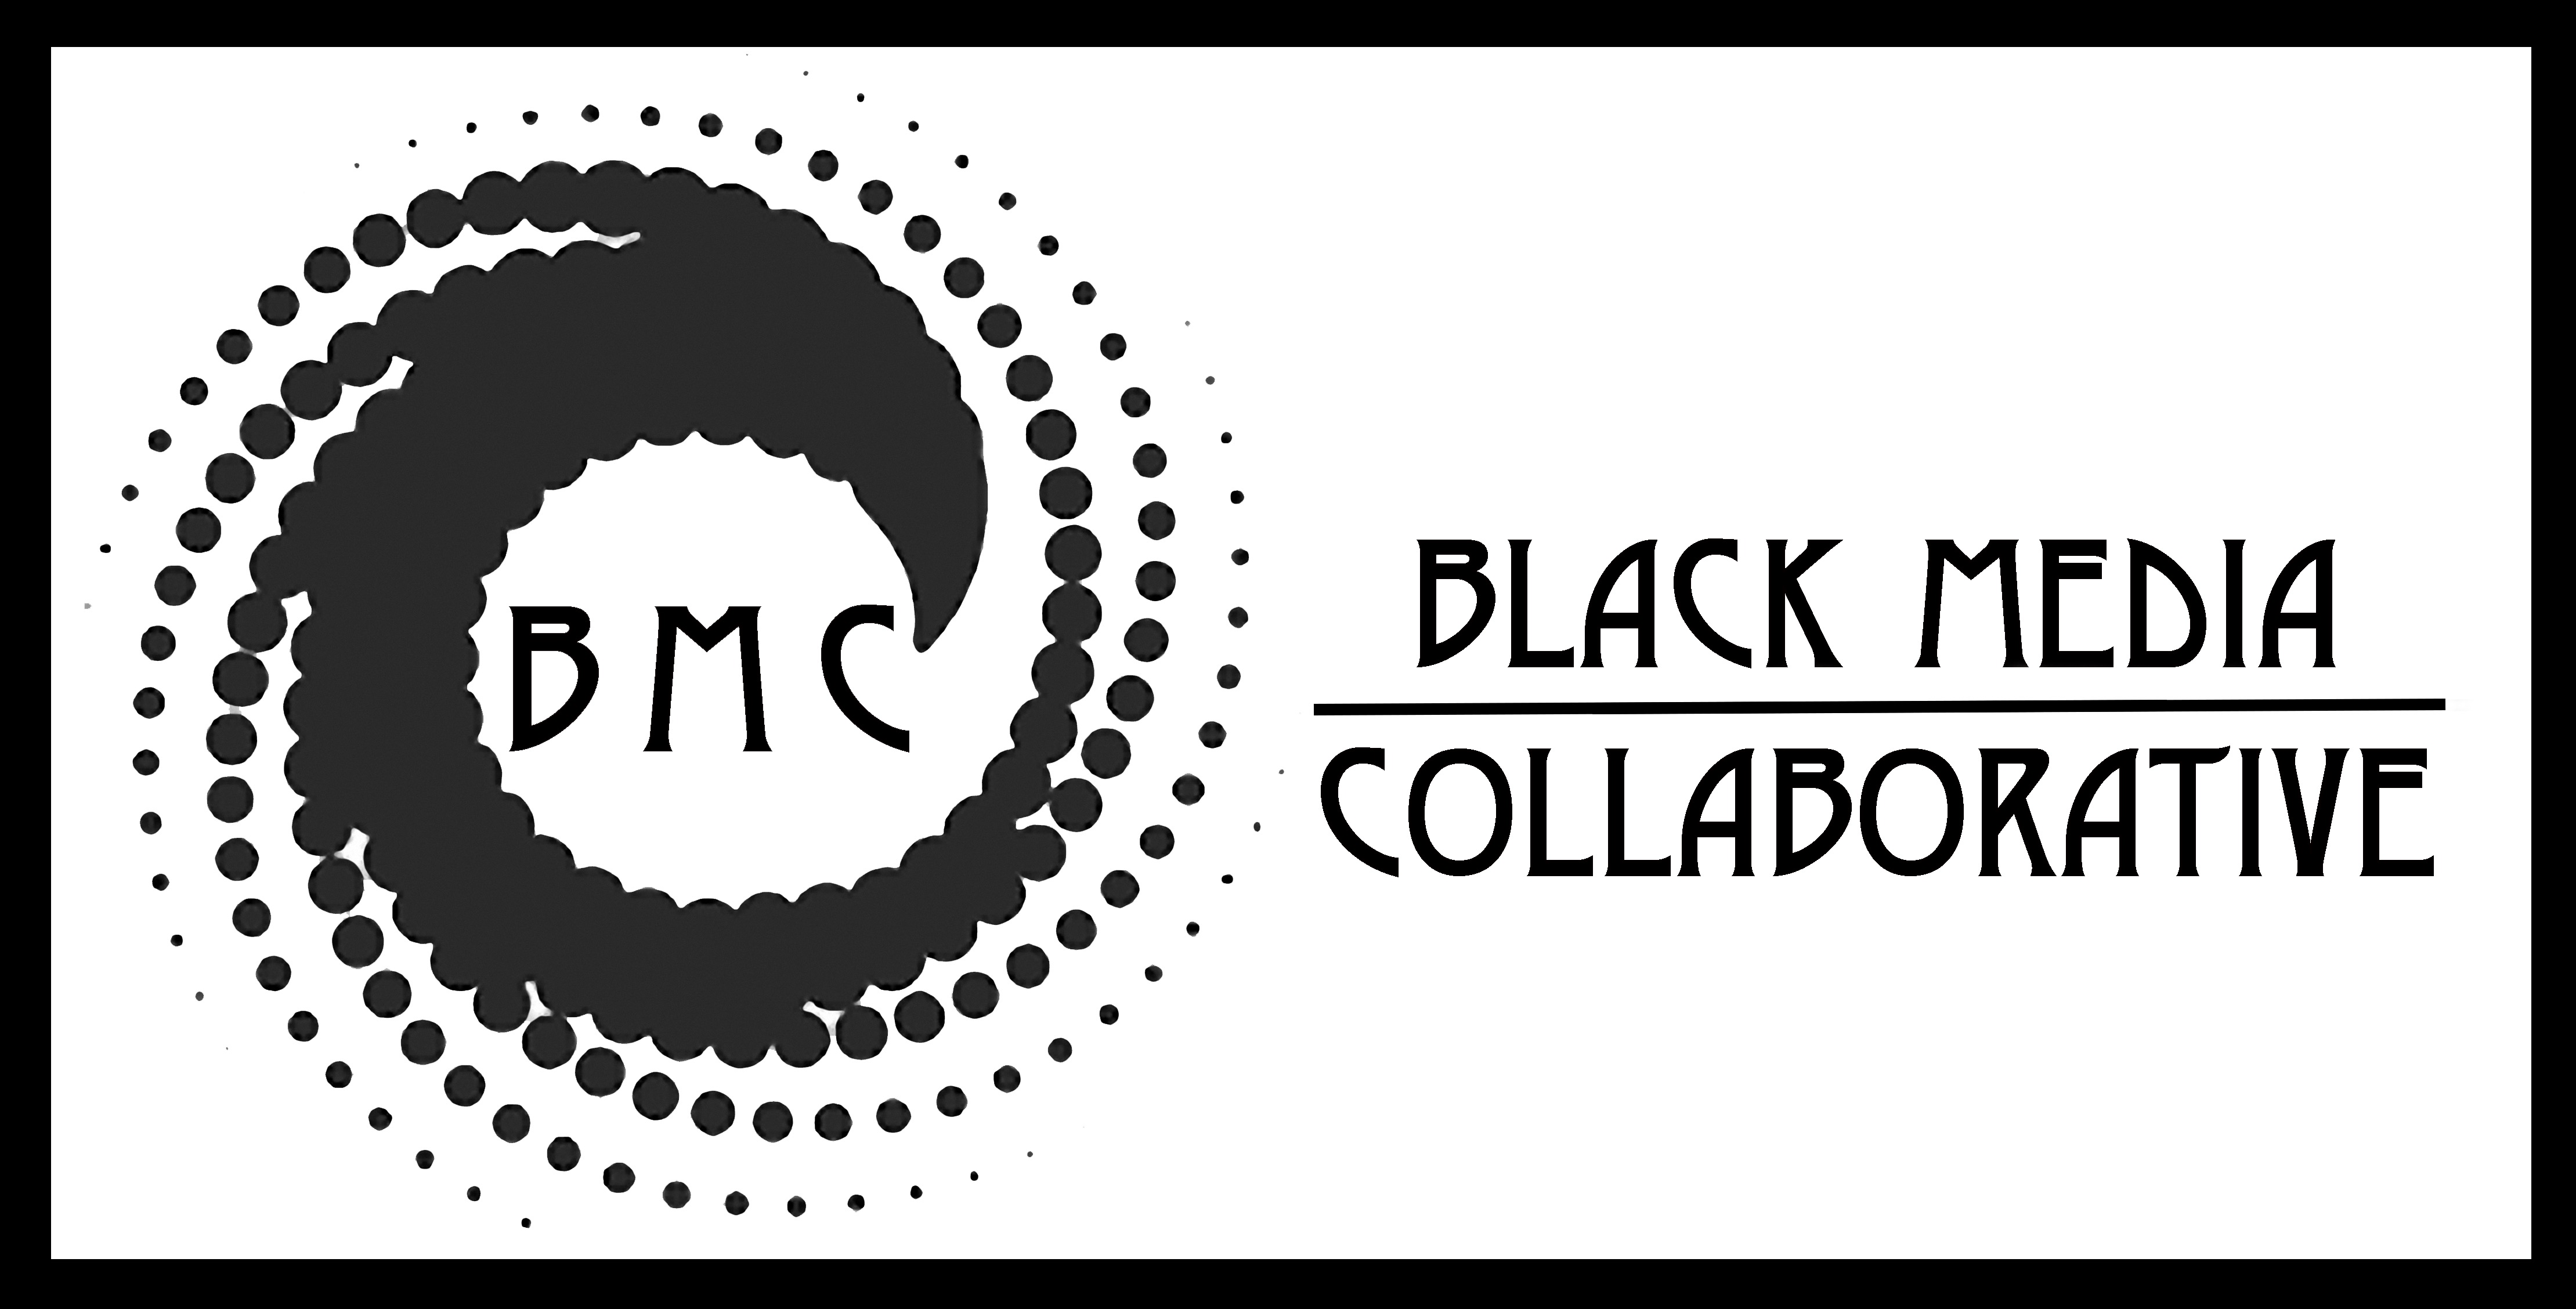 Black media collaborative logo